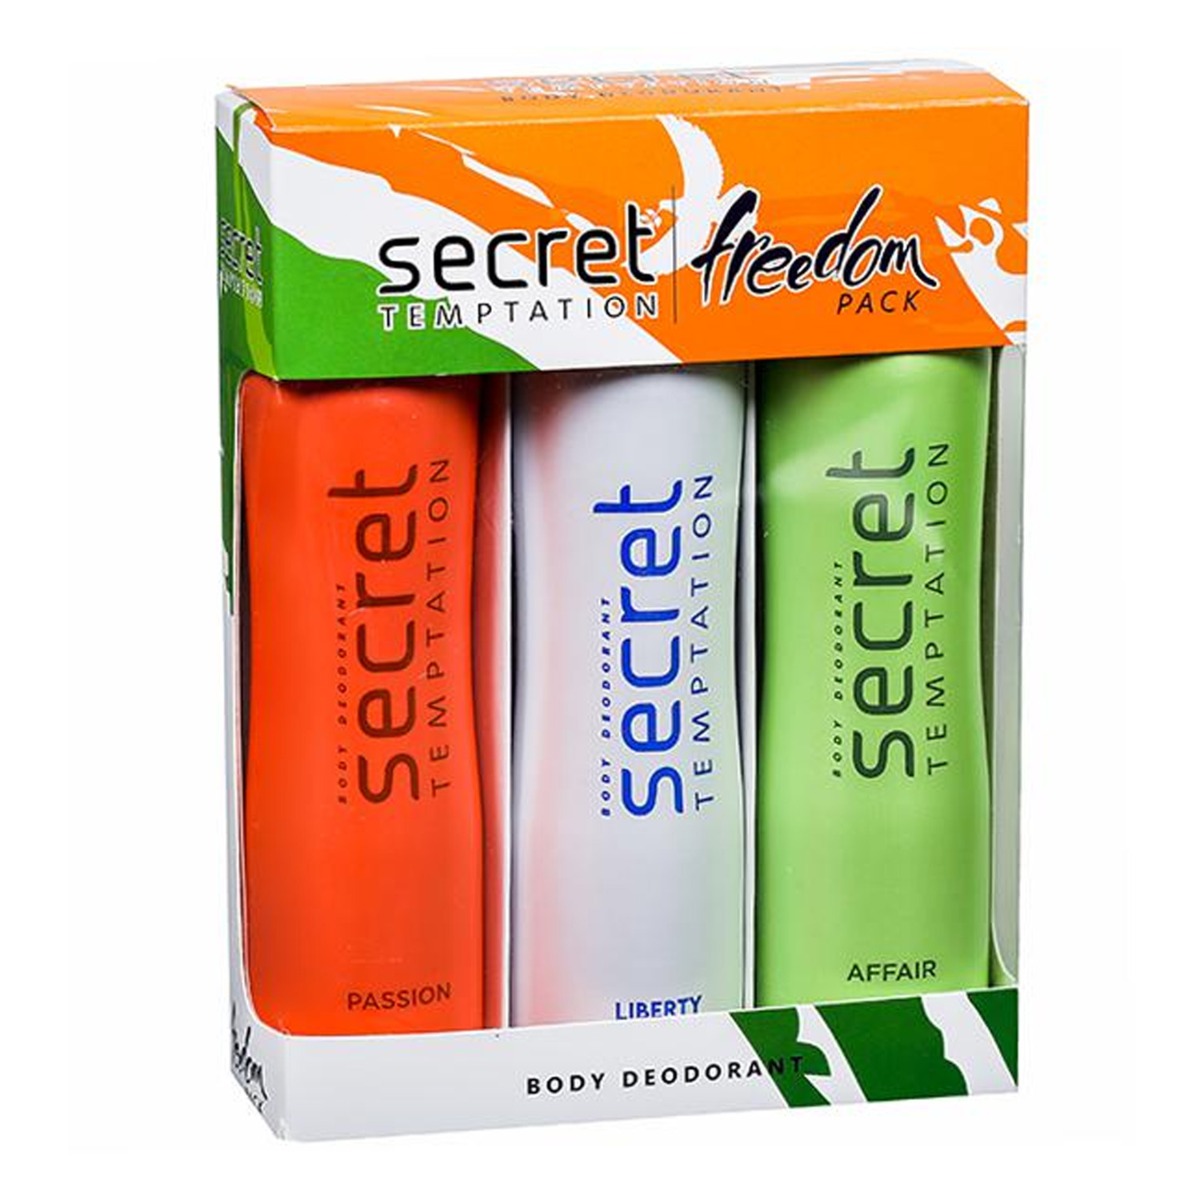 Secret Temptation Freedom Pack Body Deodorant, 450ml - Pack Of 3